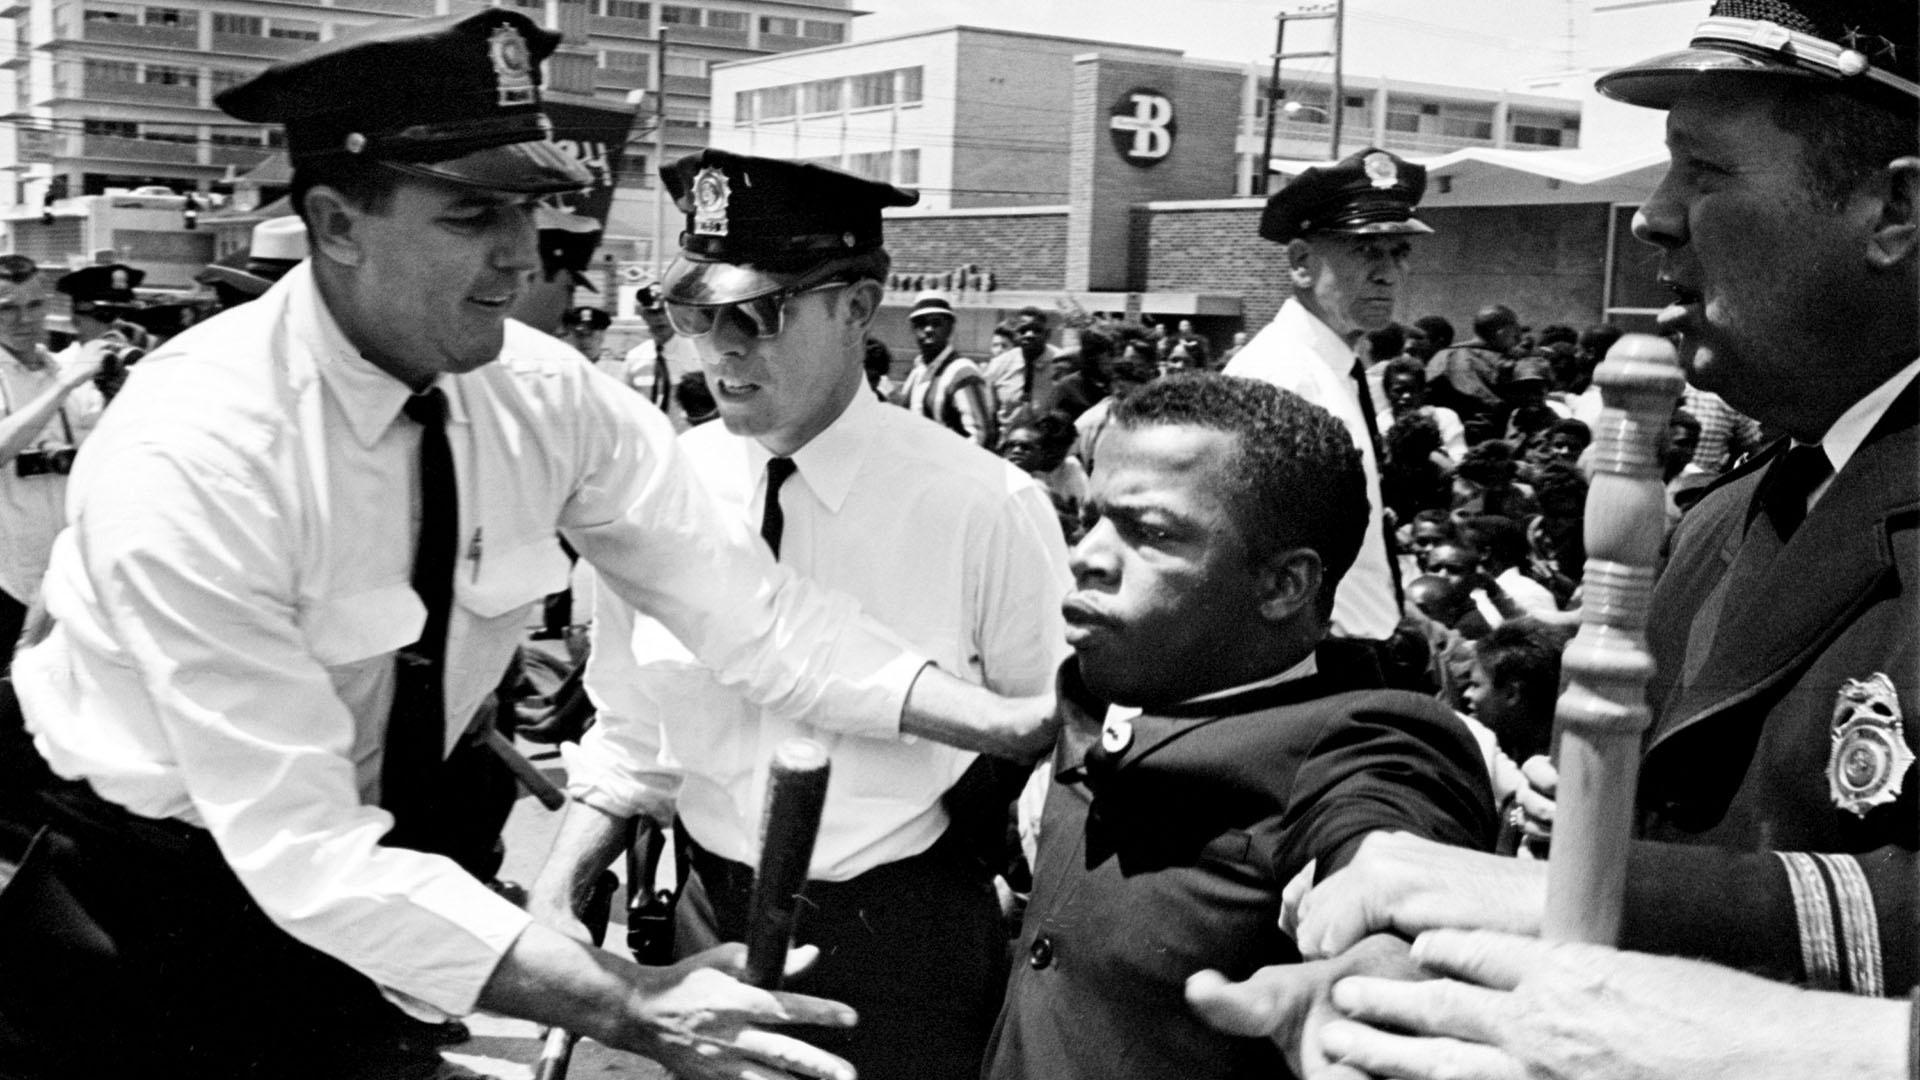 Lewis and police. Nashville, 1961.